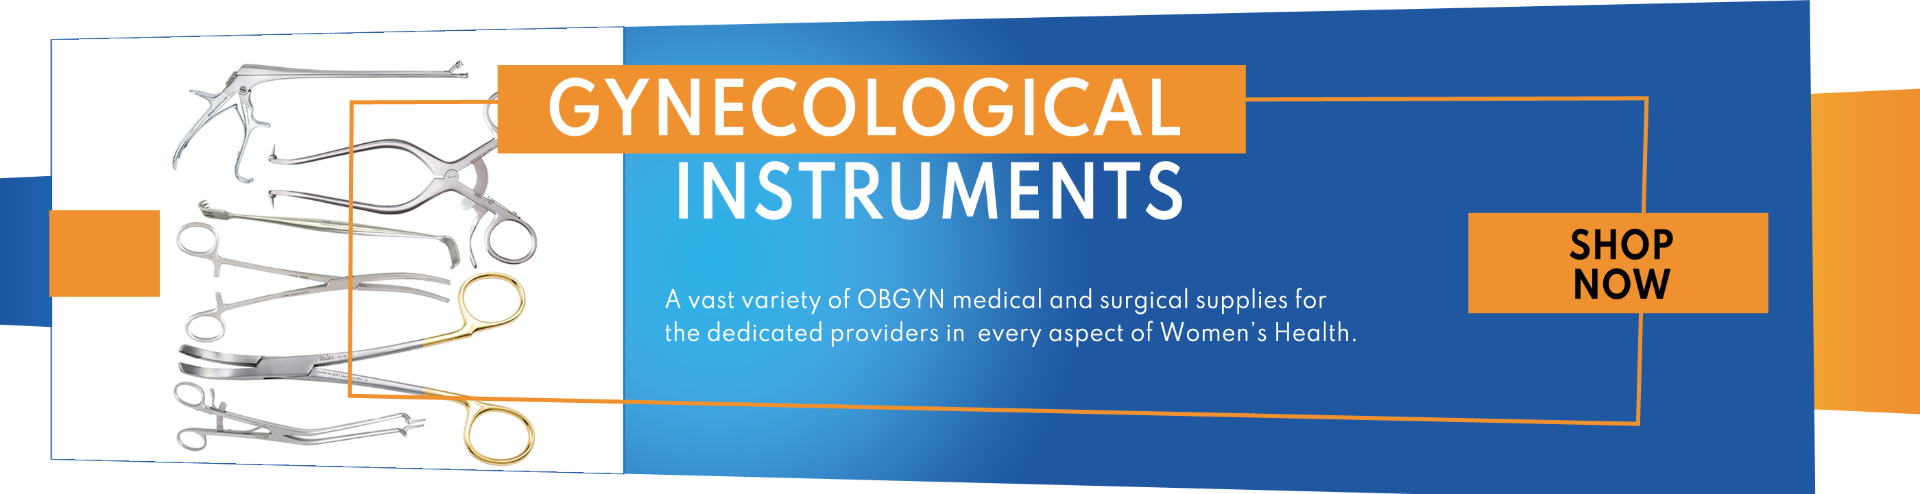 shop gynecological instruments